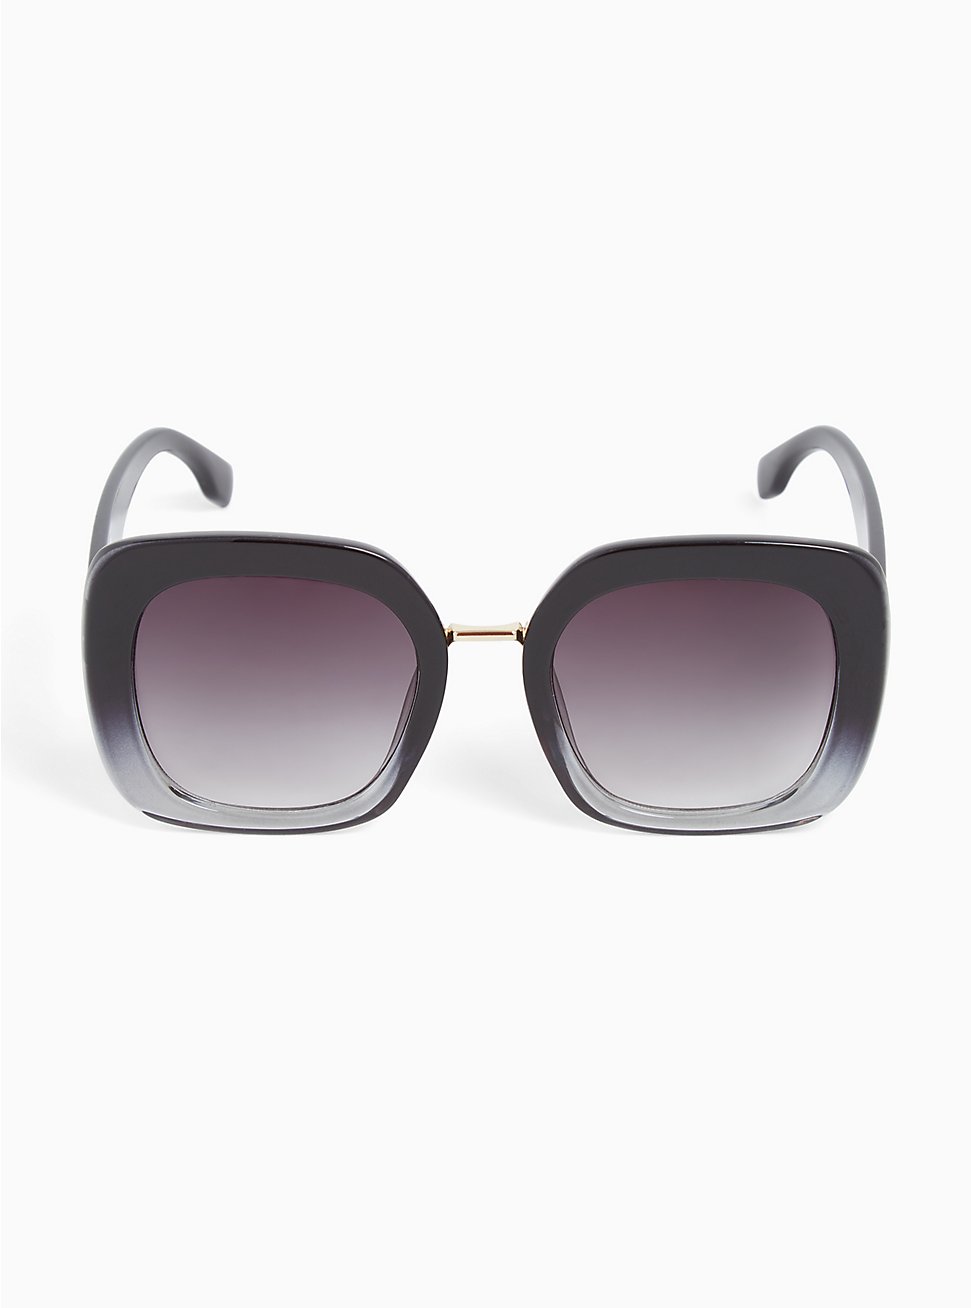 Plus Size - Black Ombre Square Sunglasses - Torrid